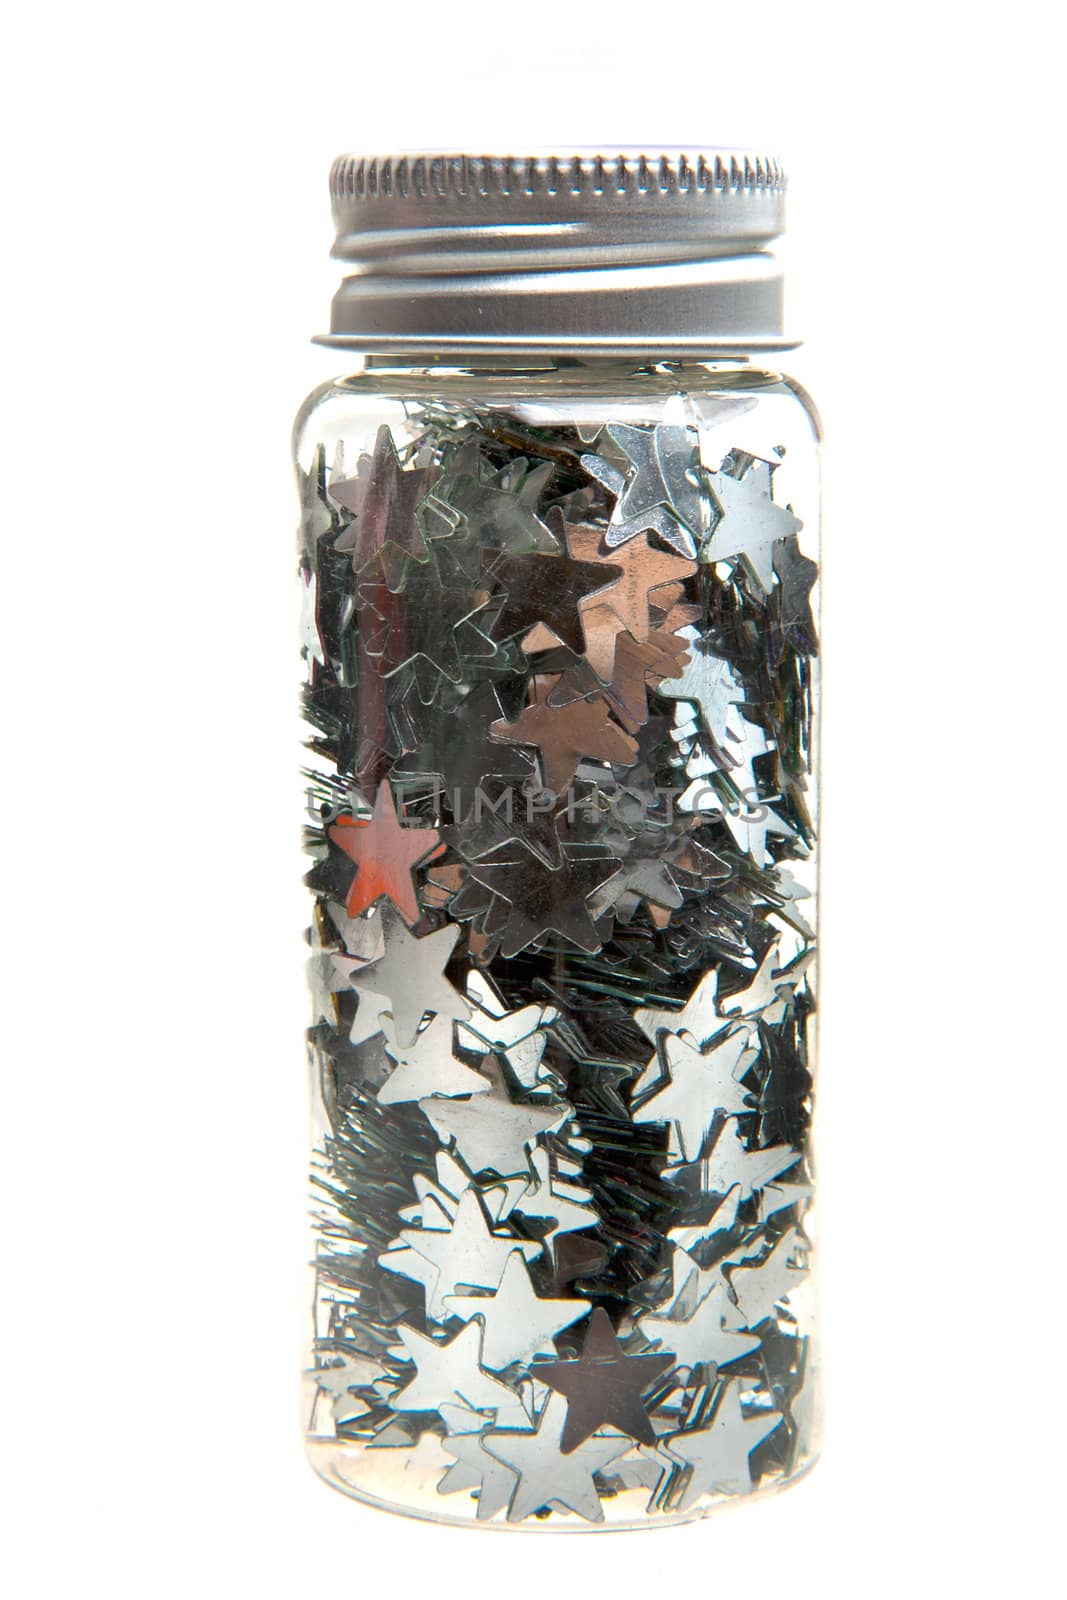 silver stars in a jar